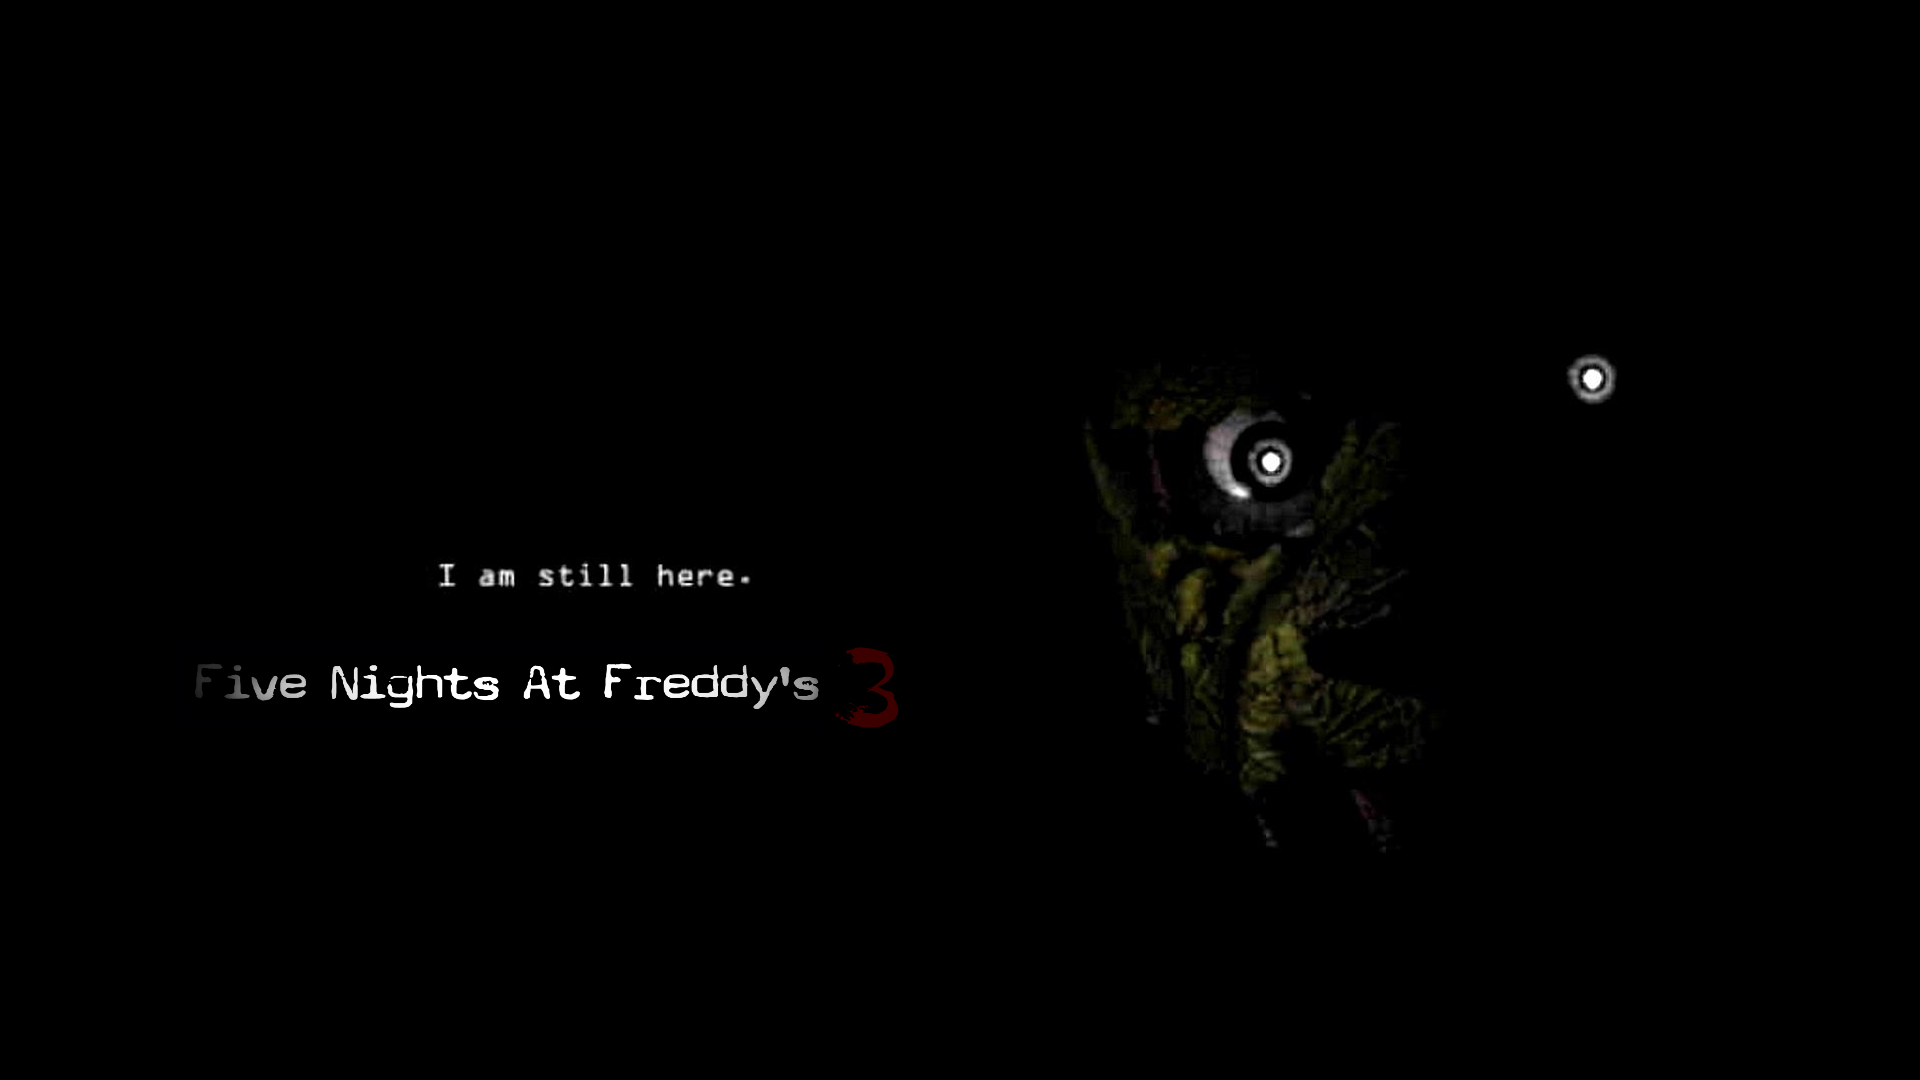 HD wallpaper: Five Nights at Freddy's, Five Nights at Freddy's 3